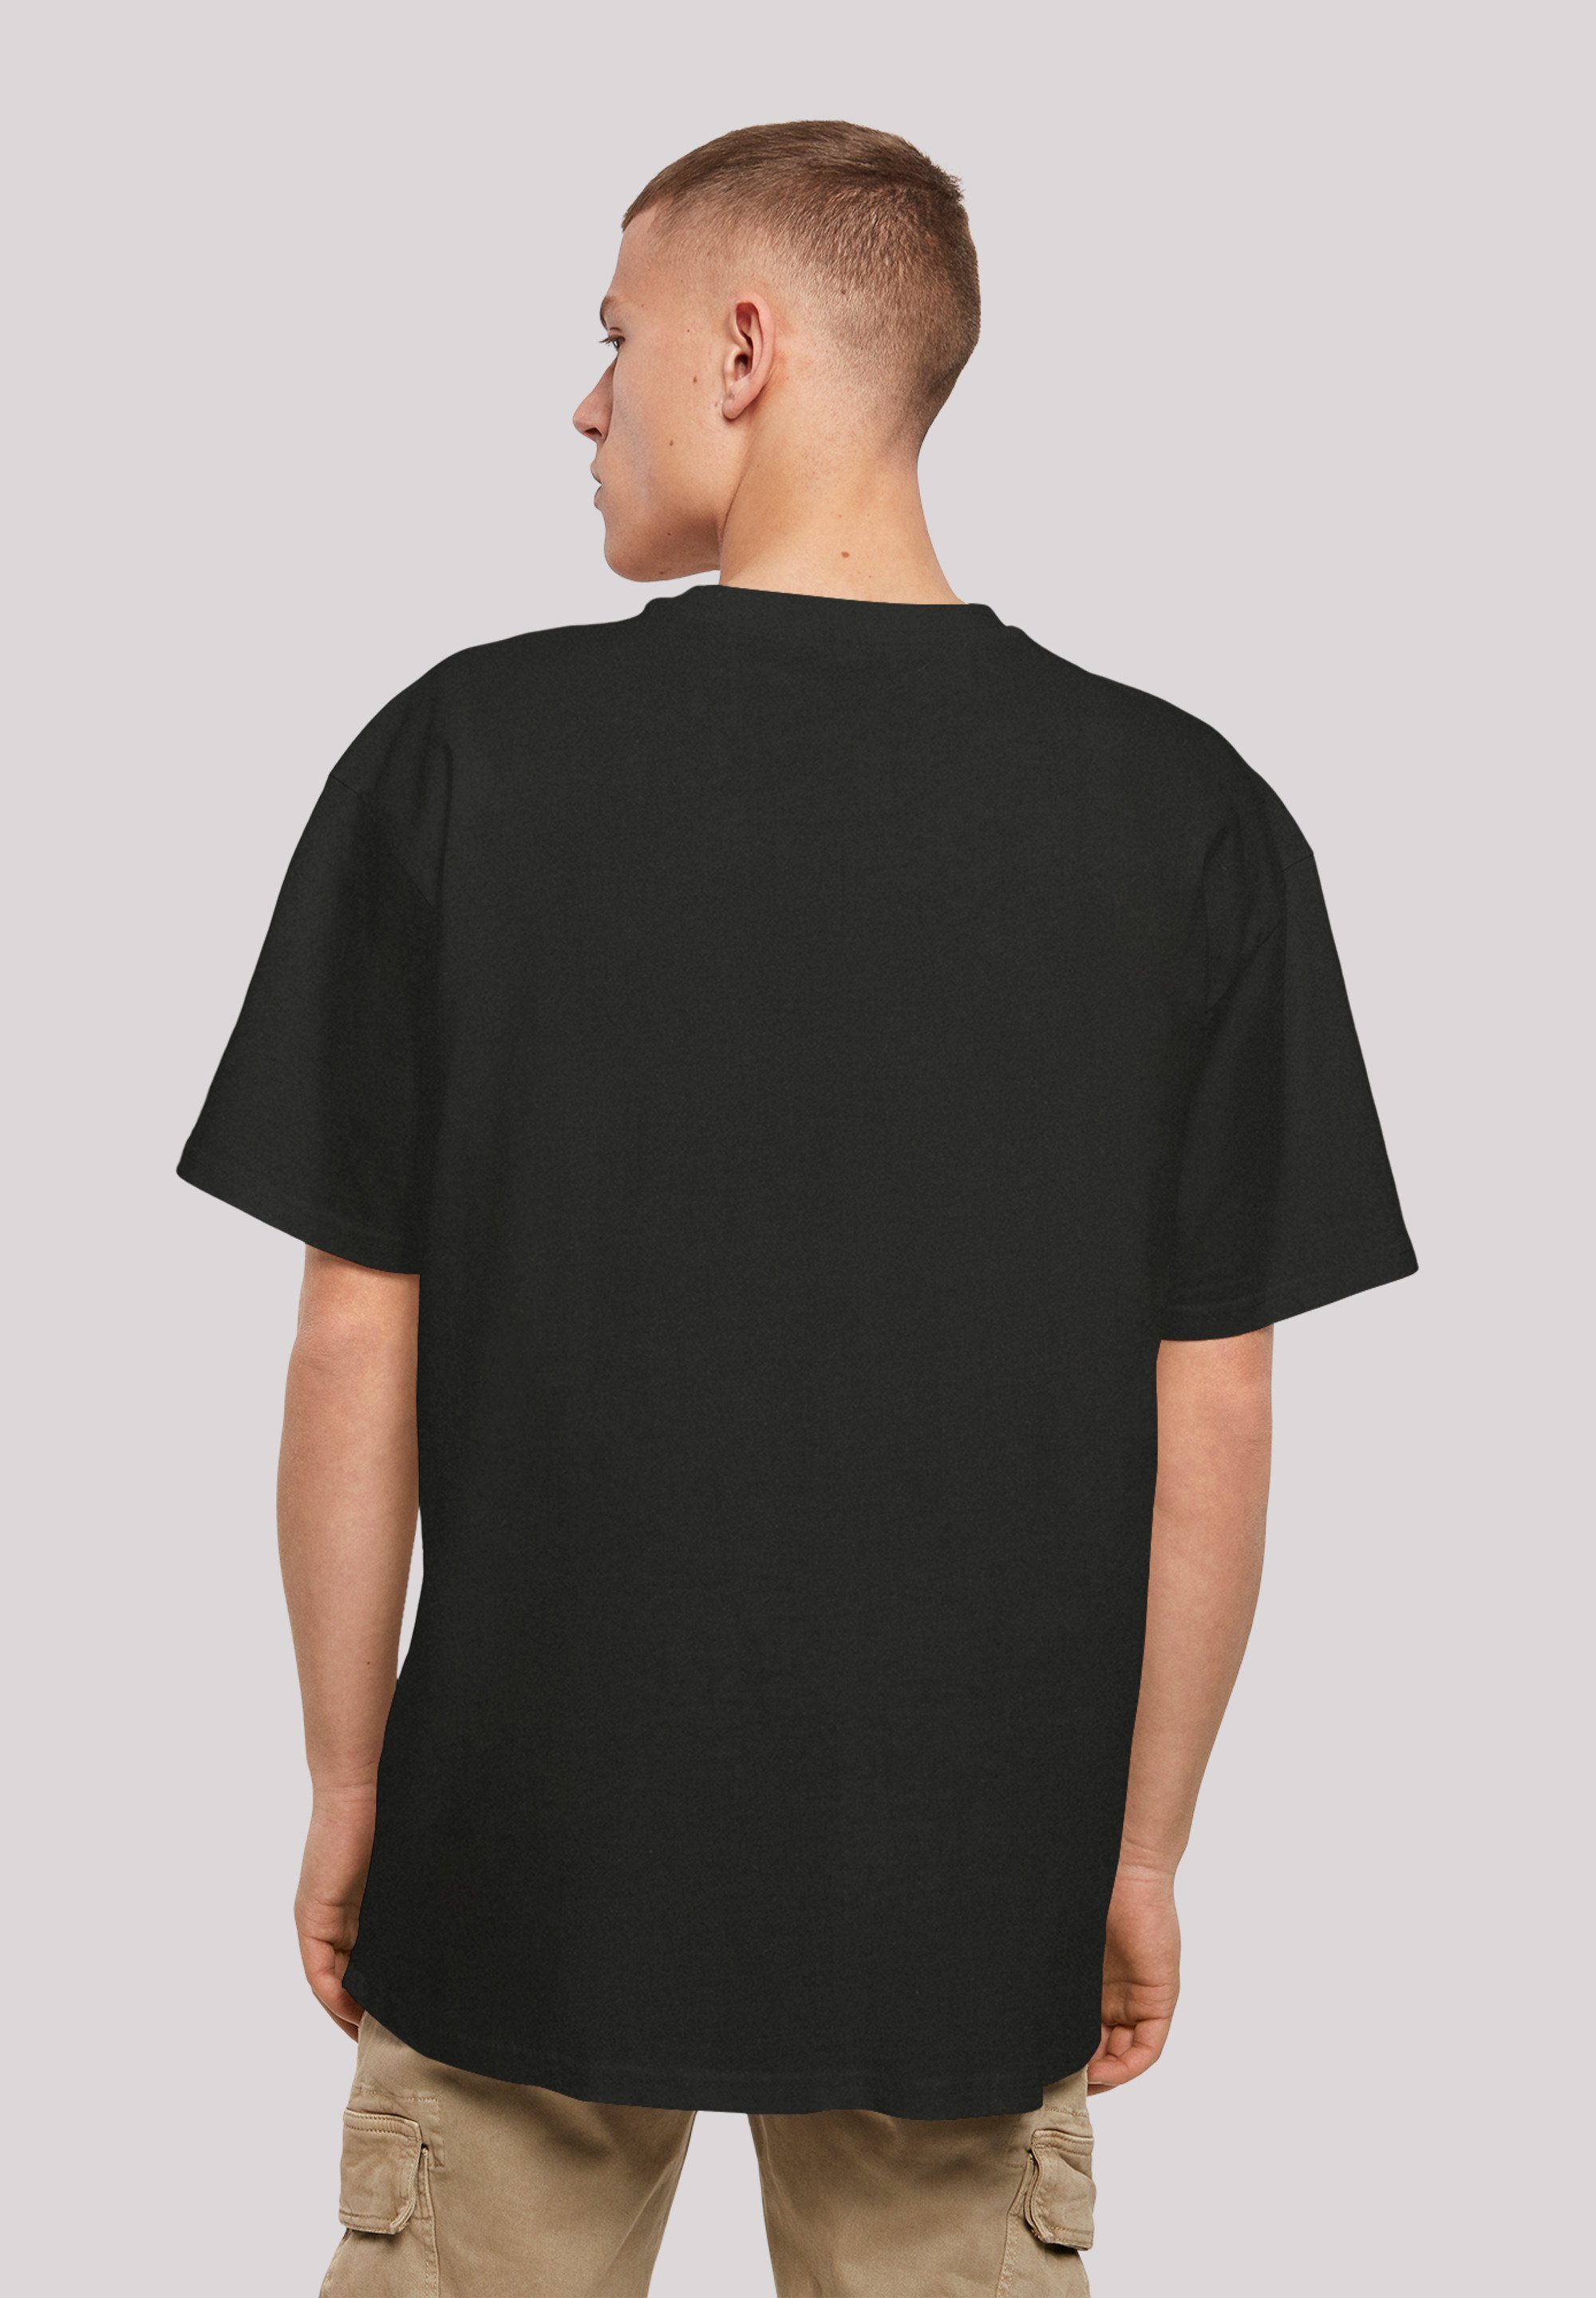 F4NT4STIC T-Shirt OVERSIZE schwarz TEE Rubber Duck Print Wizard